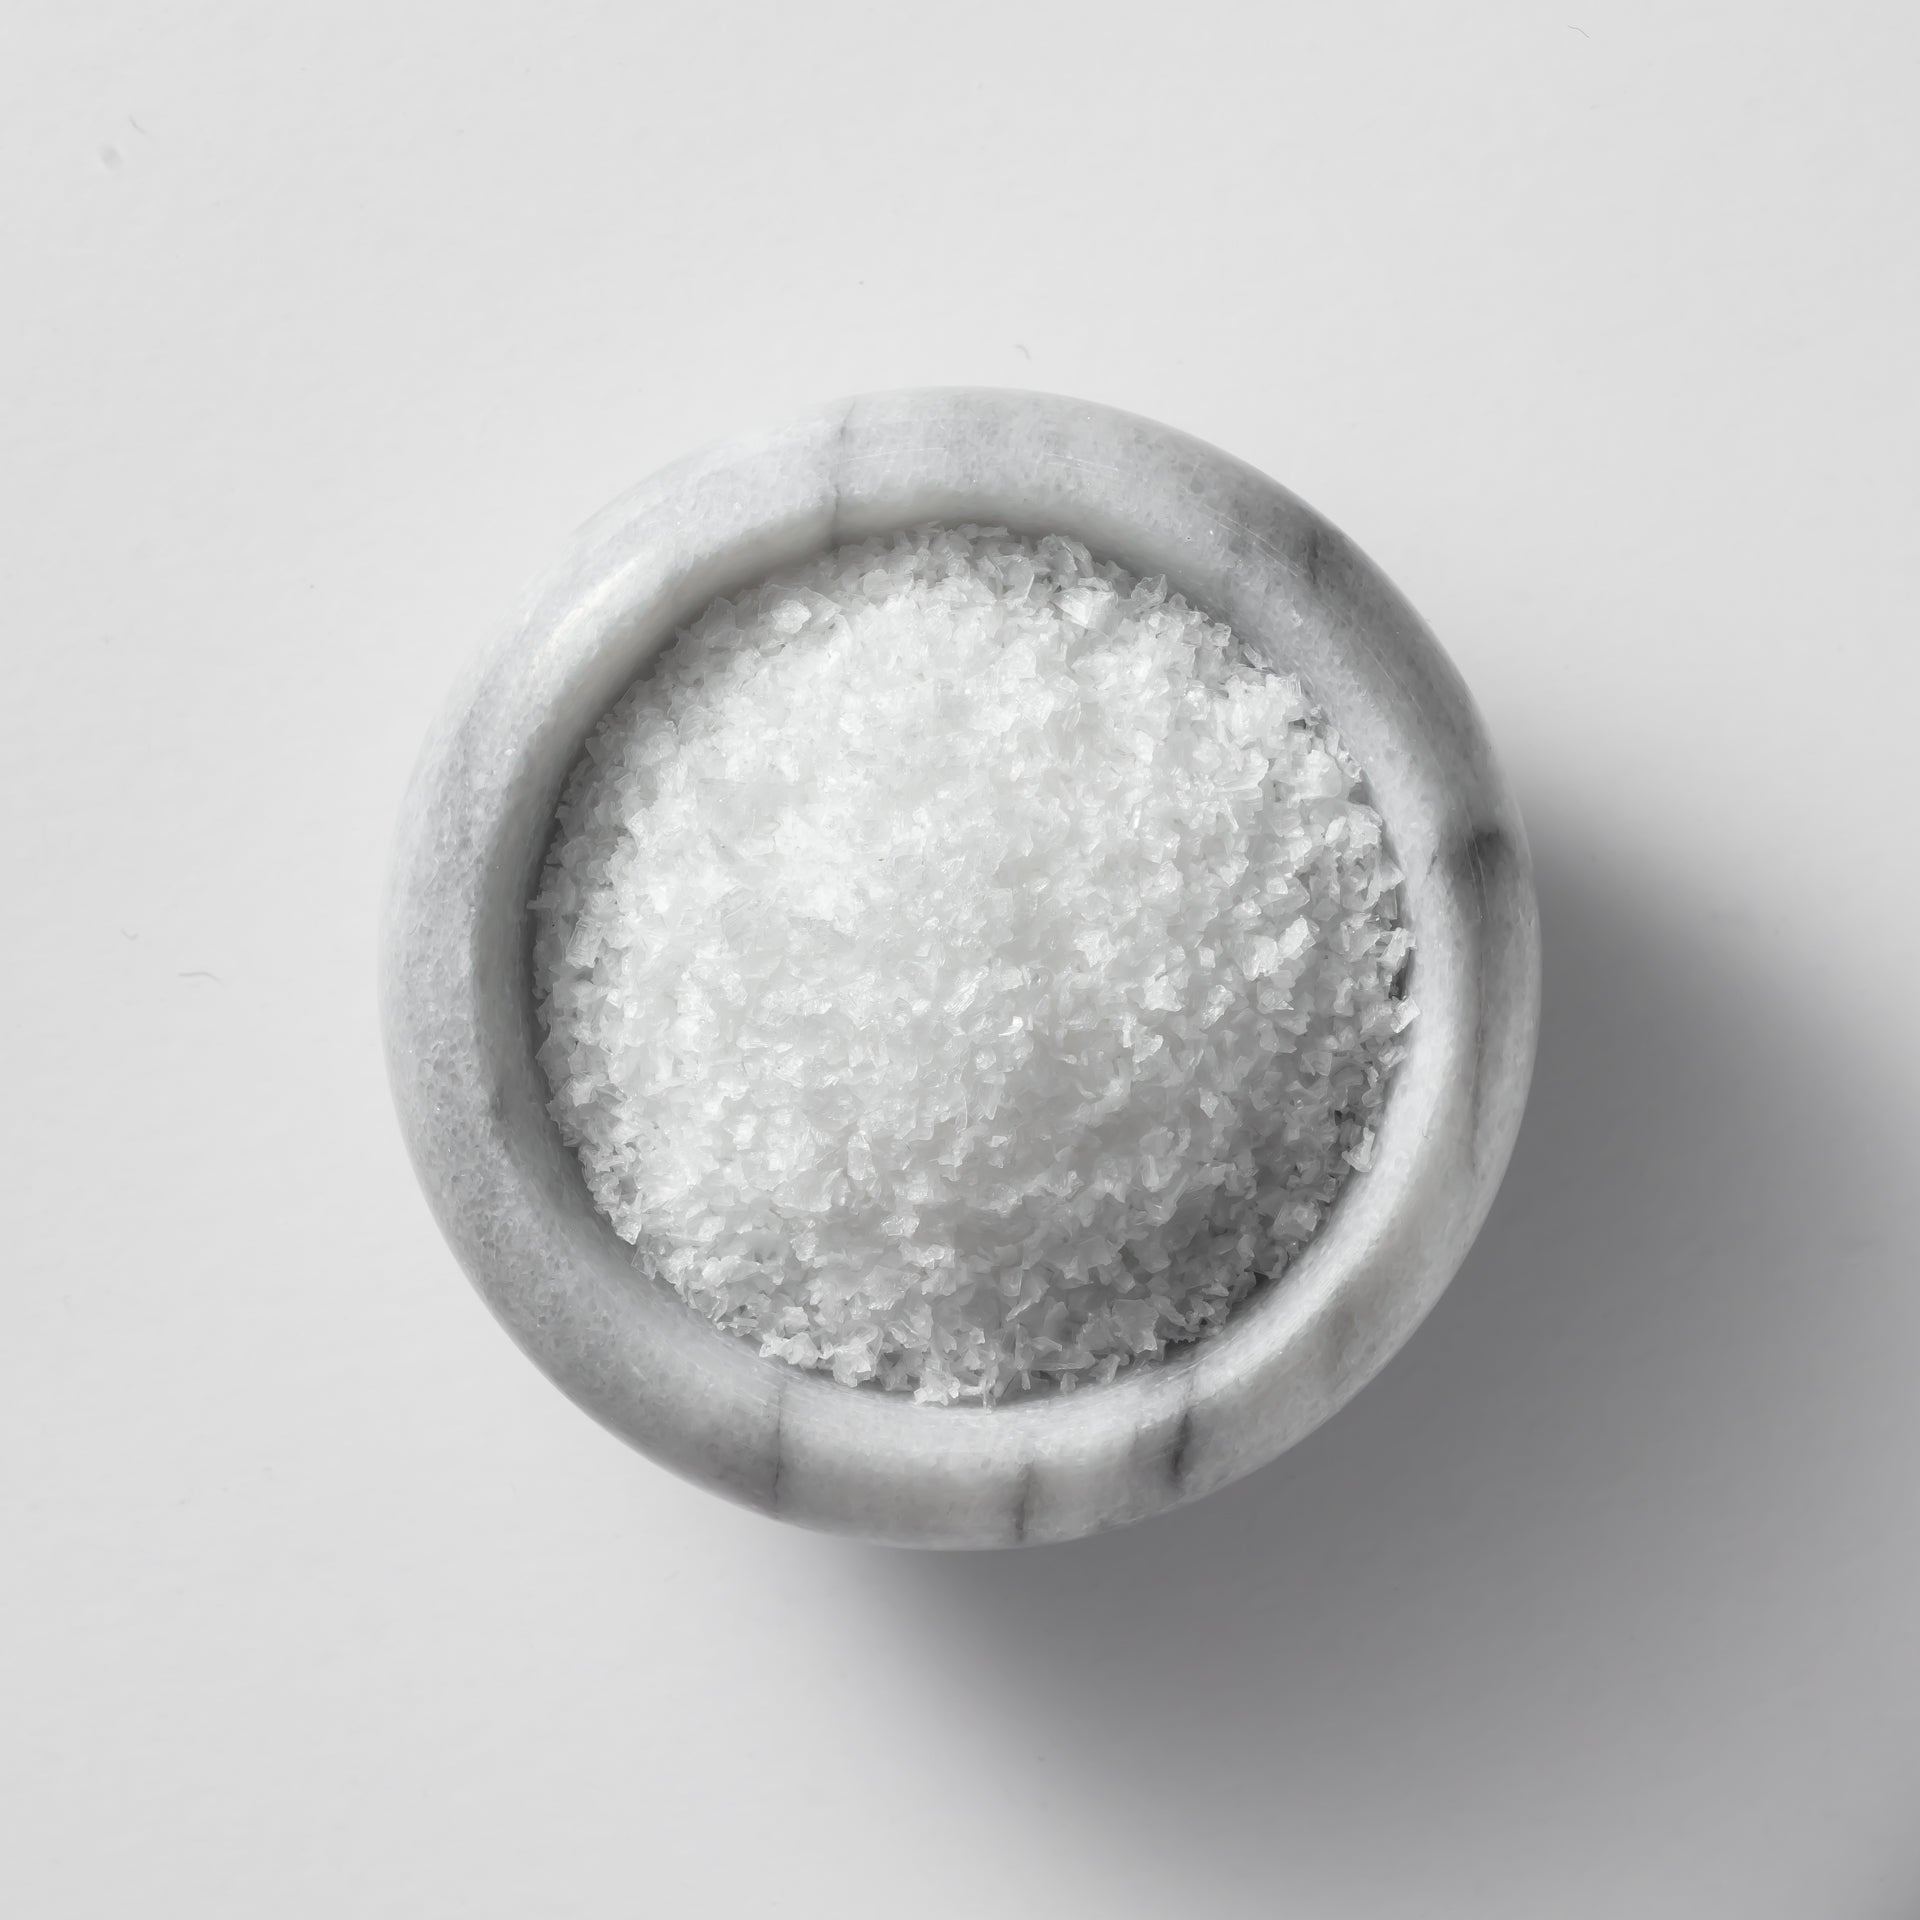 osmo salt expensive｜TikTok Search